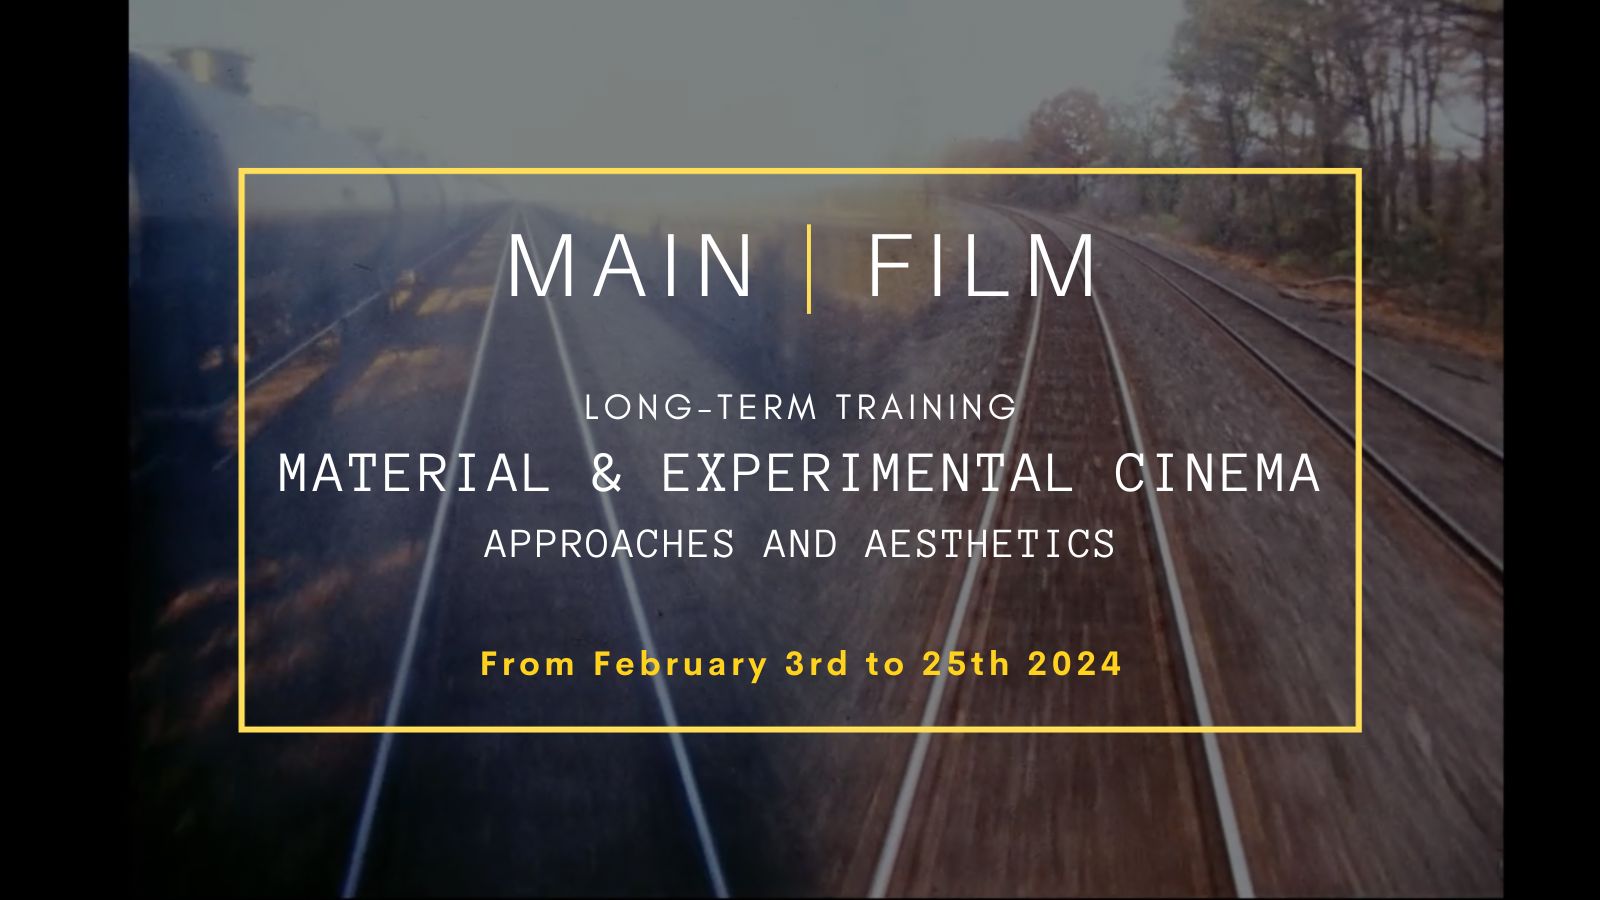 Material & experimental cinema